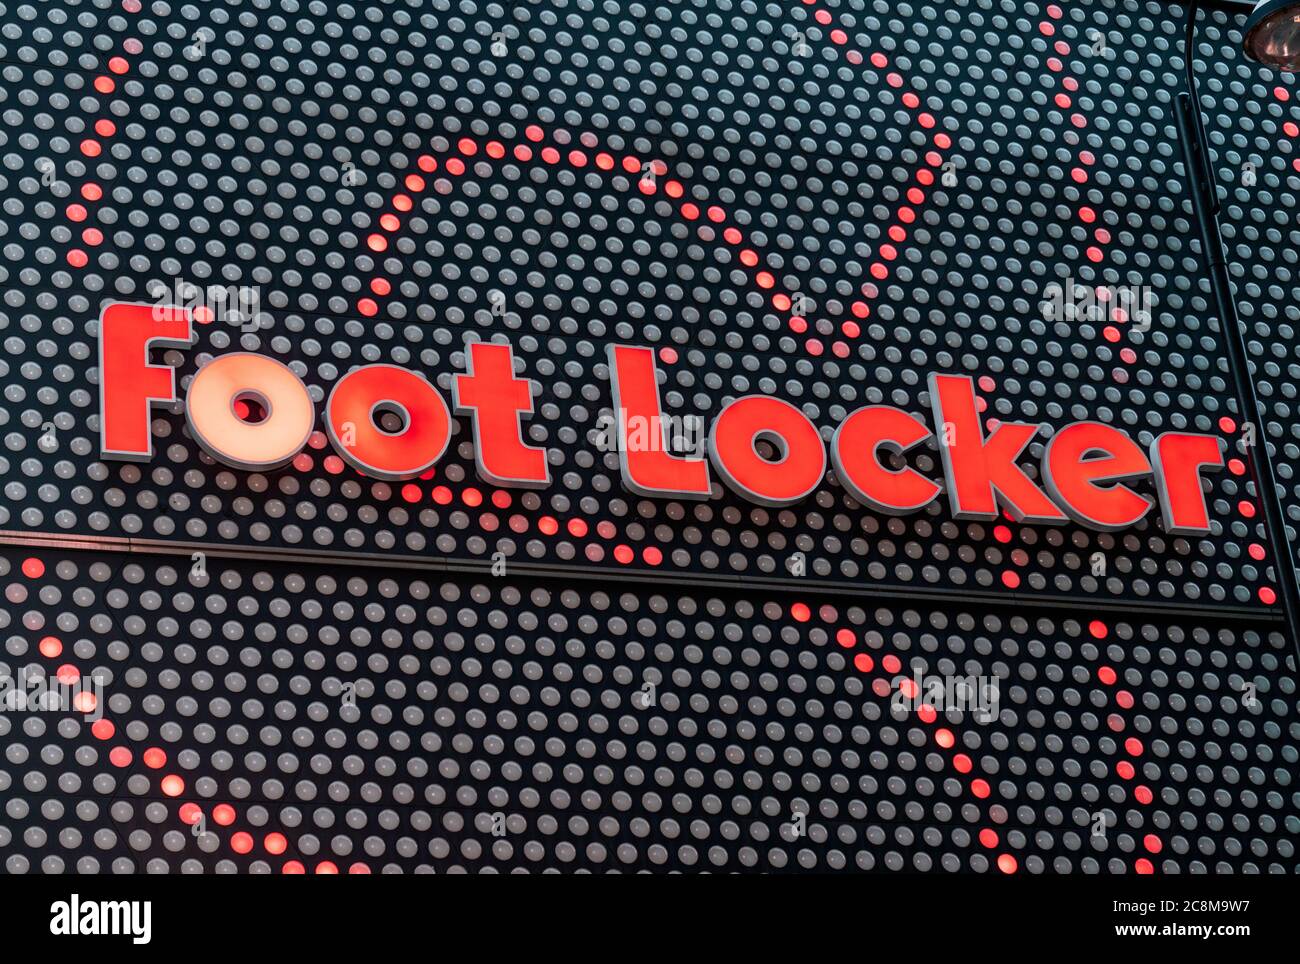 American multinational sportswear and footwear retailer Foot Locker store and logo seen in Hong Kong. Stock Photo